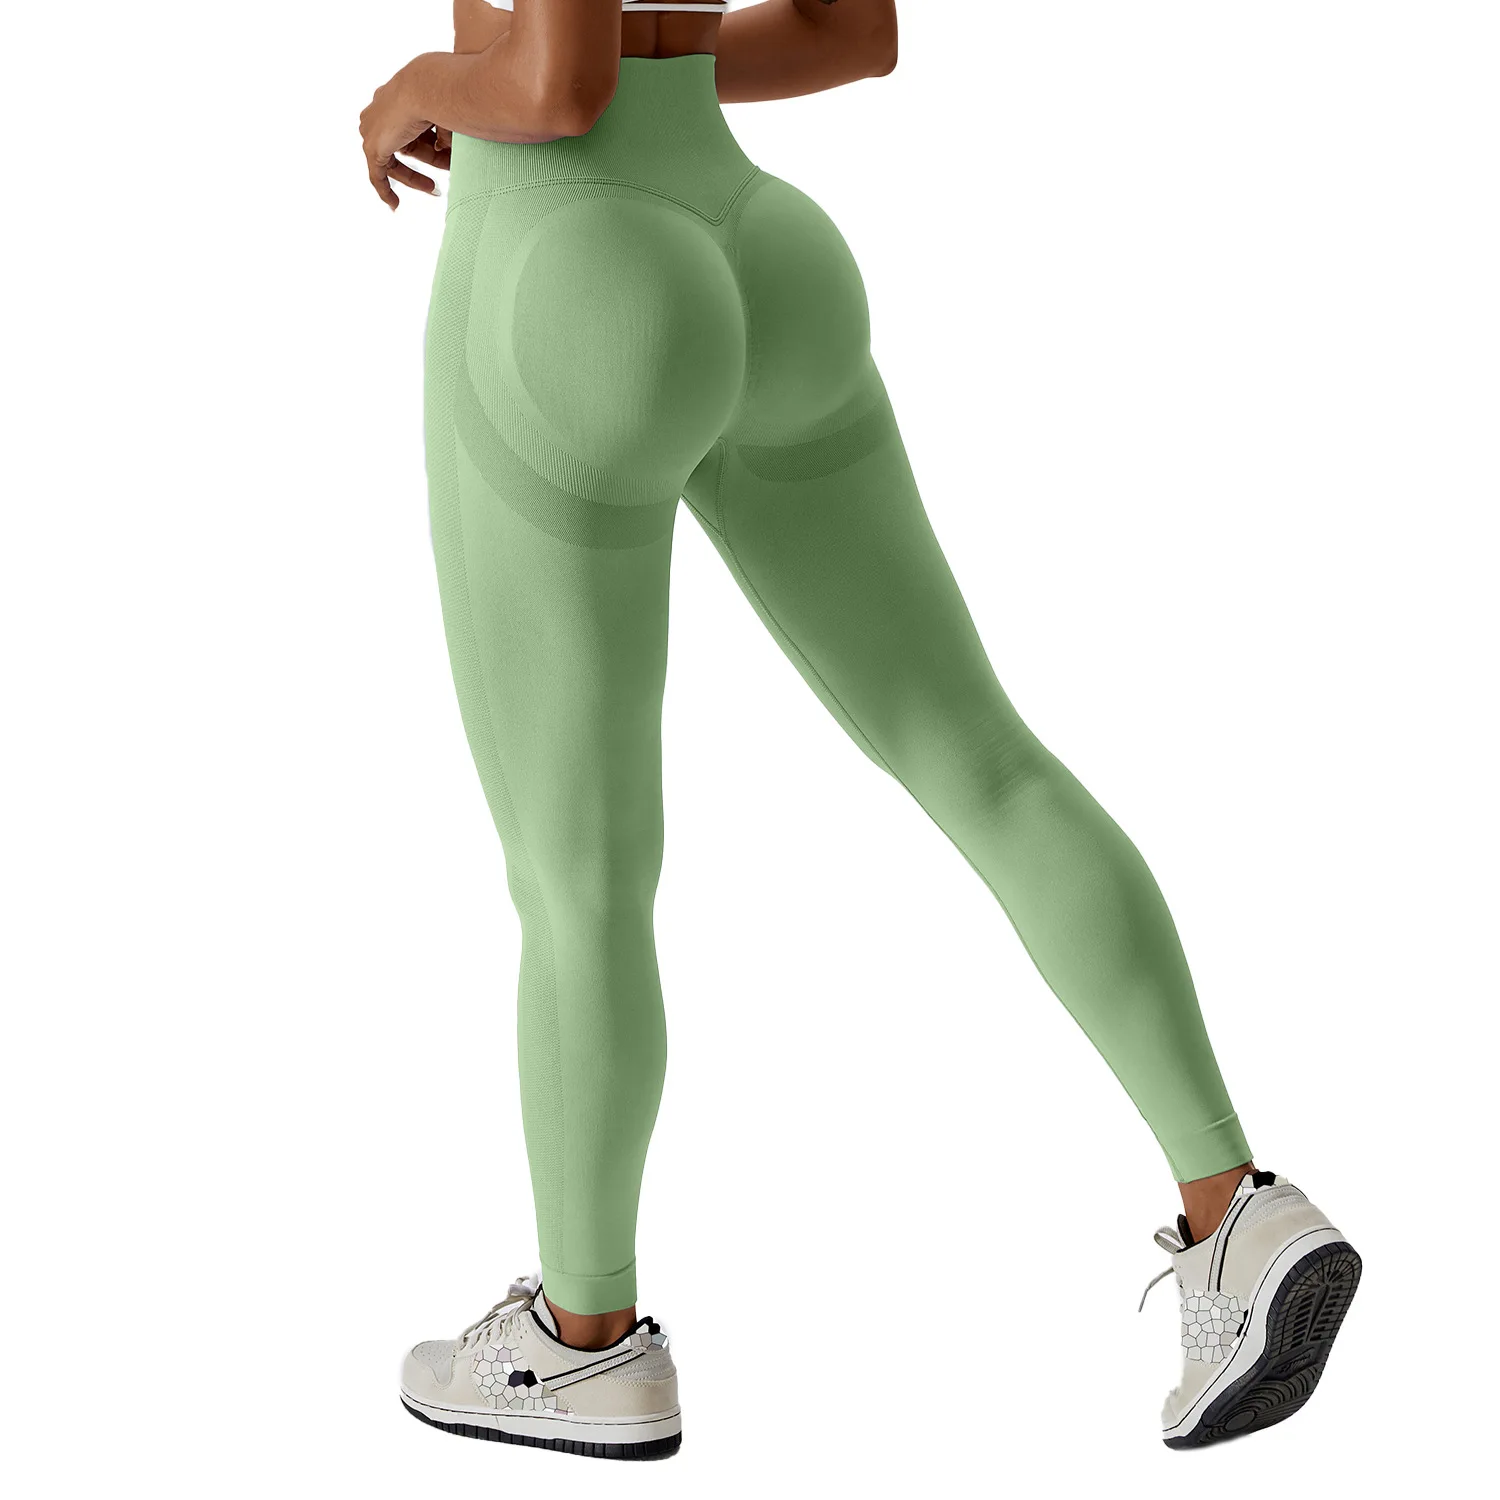 OEM Yoga Leggings Gym Sportswear Women Pants Workout Clothing Fitness Active Sports High Waist Scrunch Seamless Leggings